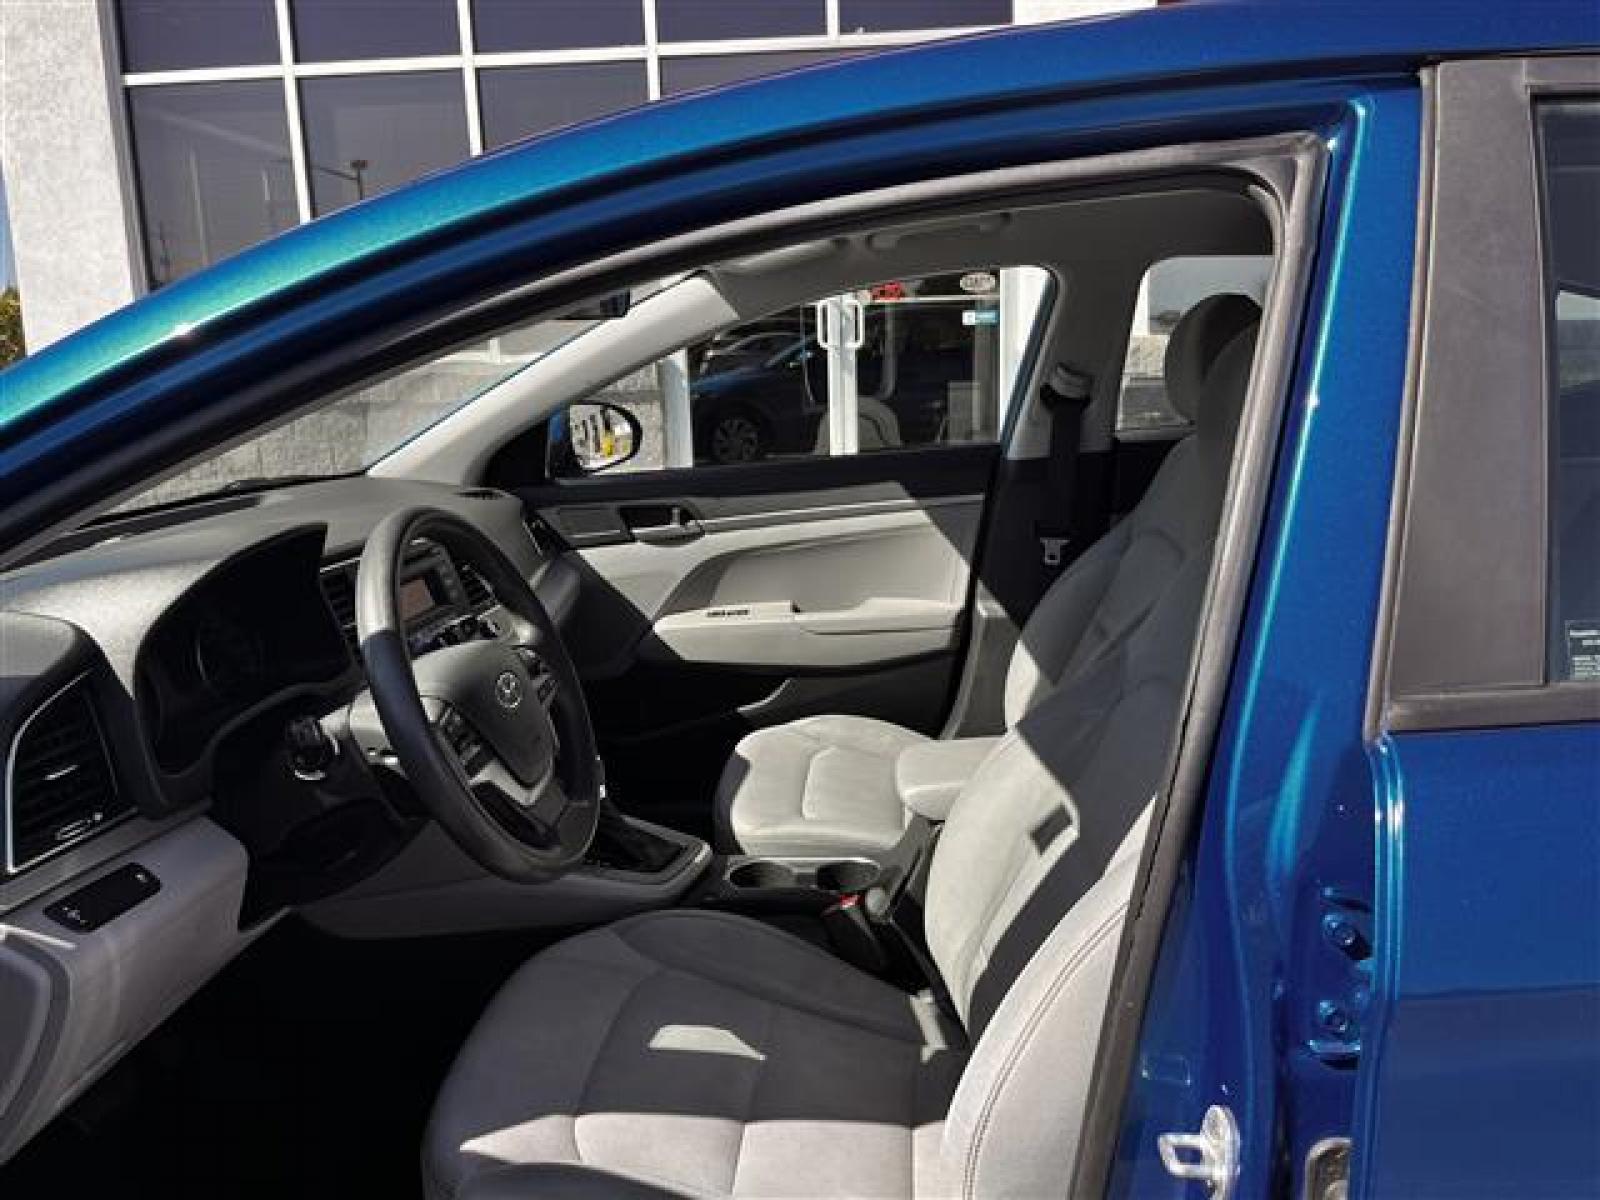 2017 Marina Blue /Gray Hyundai Elantra SE 6AT (5NPD74LF9HH) , 6-Speed Automatic transmission, located at 3900 Bragg Blvd., Fayetteville, NC, 28303, (910) 868-3000, 35.081905, -78.943367 - T-9315-R - 2017 Hyundai Elantra 5NPD74LF9HH069580 - Photo #9